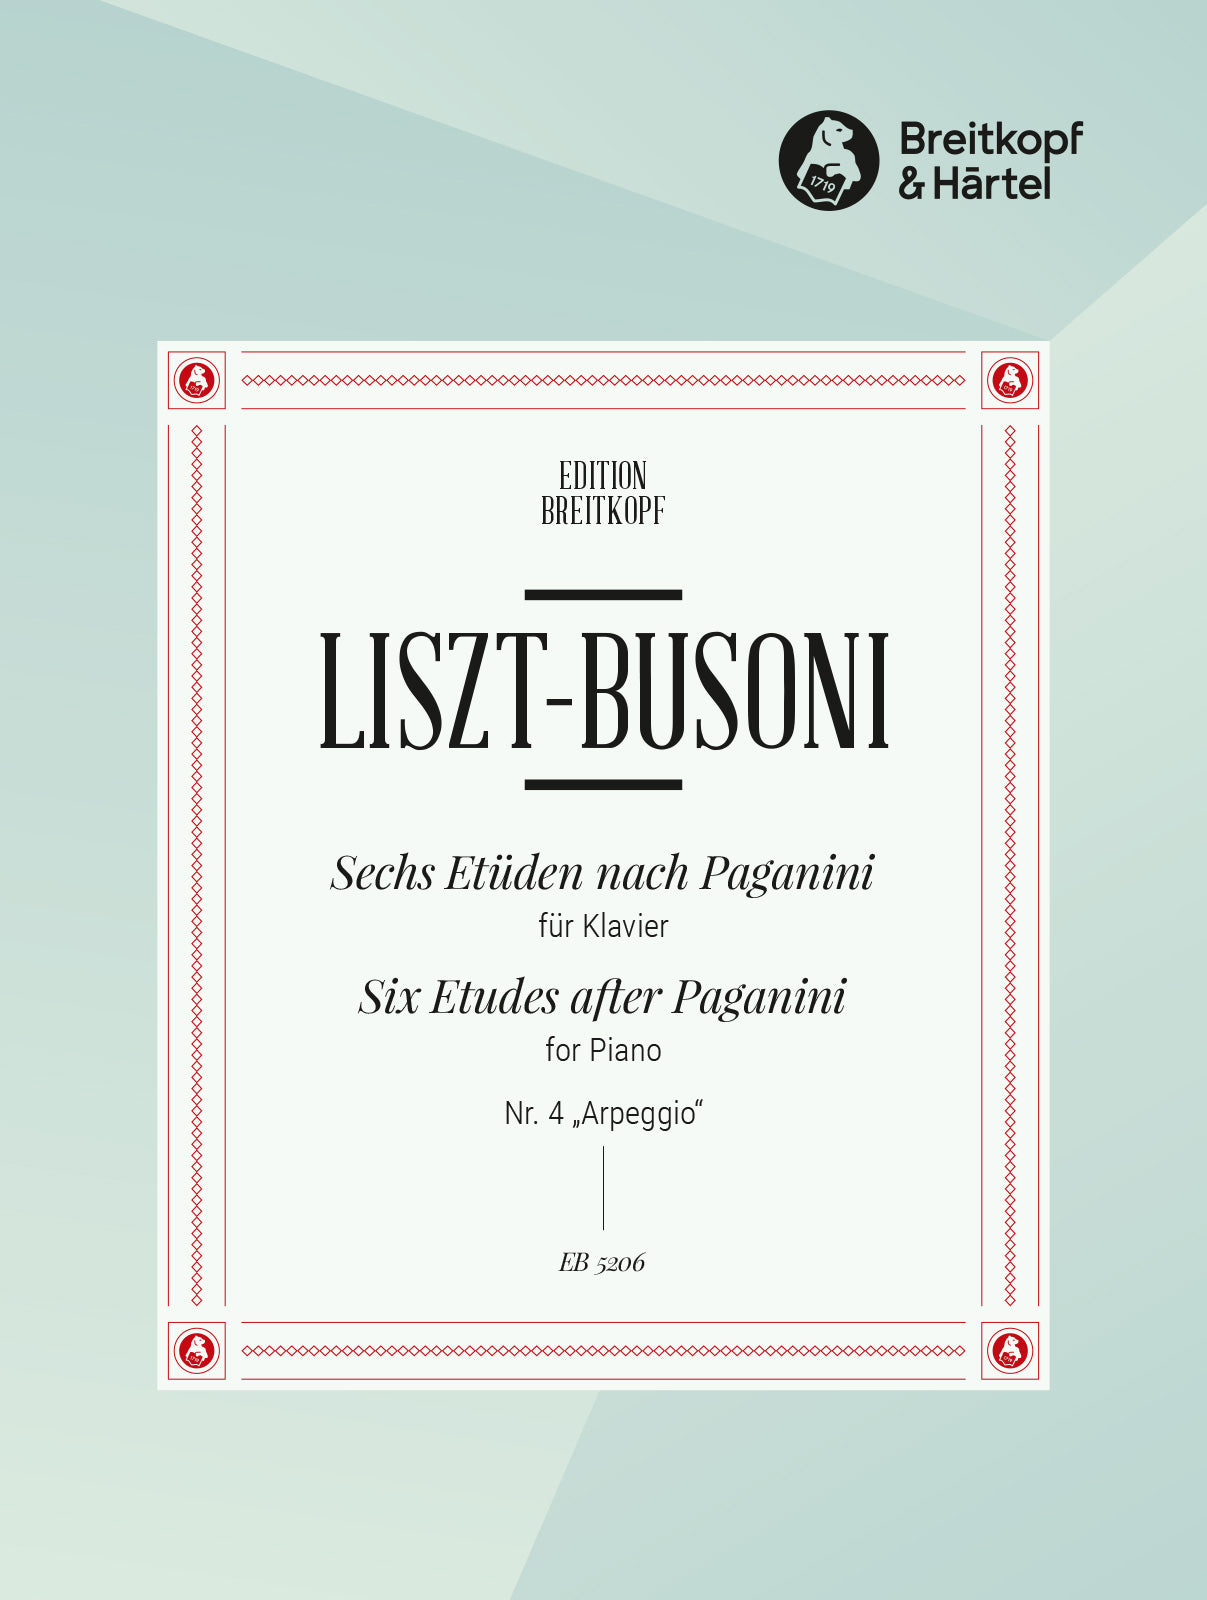 Liszt-Busoni: Etude No. 4 after Paganini - "Arpeggio"